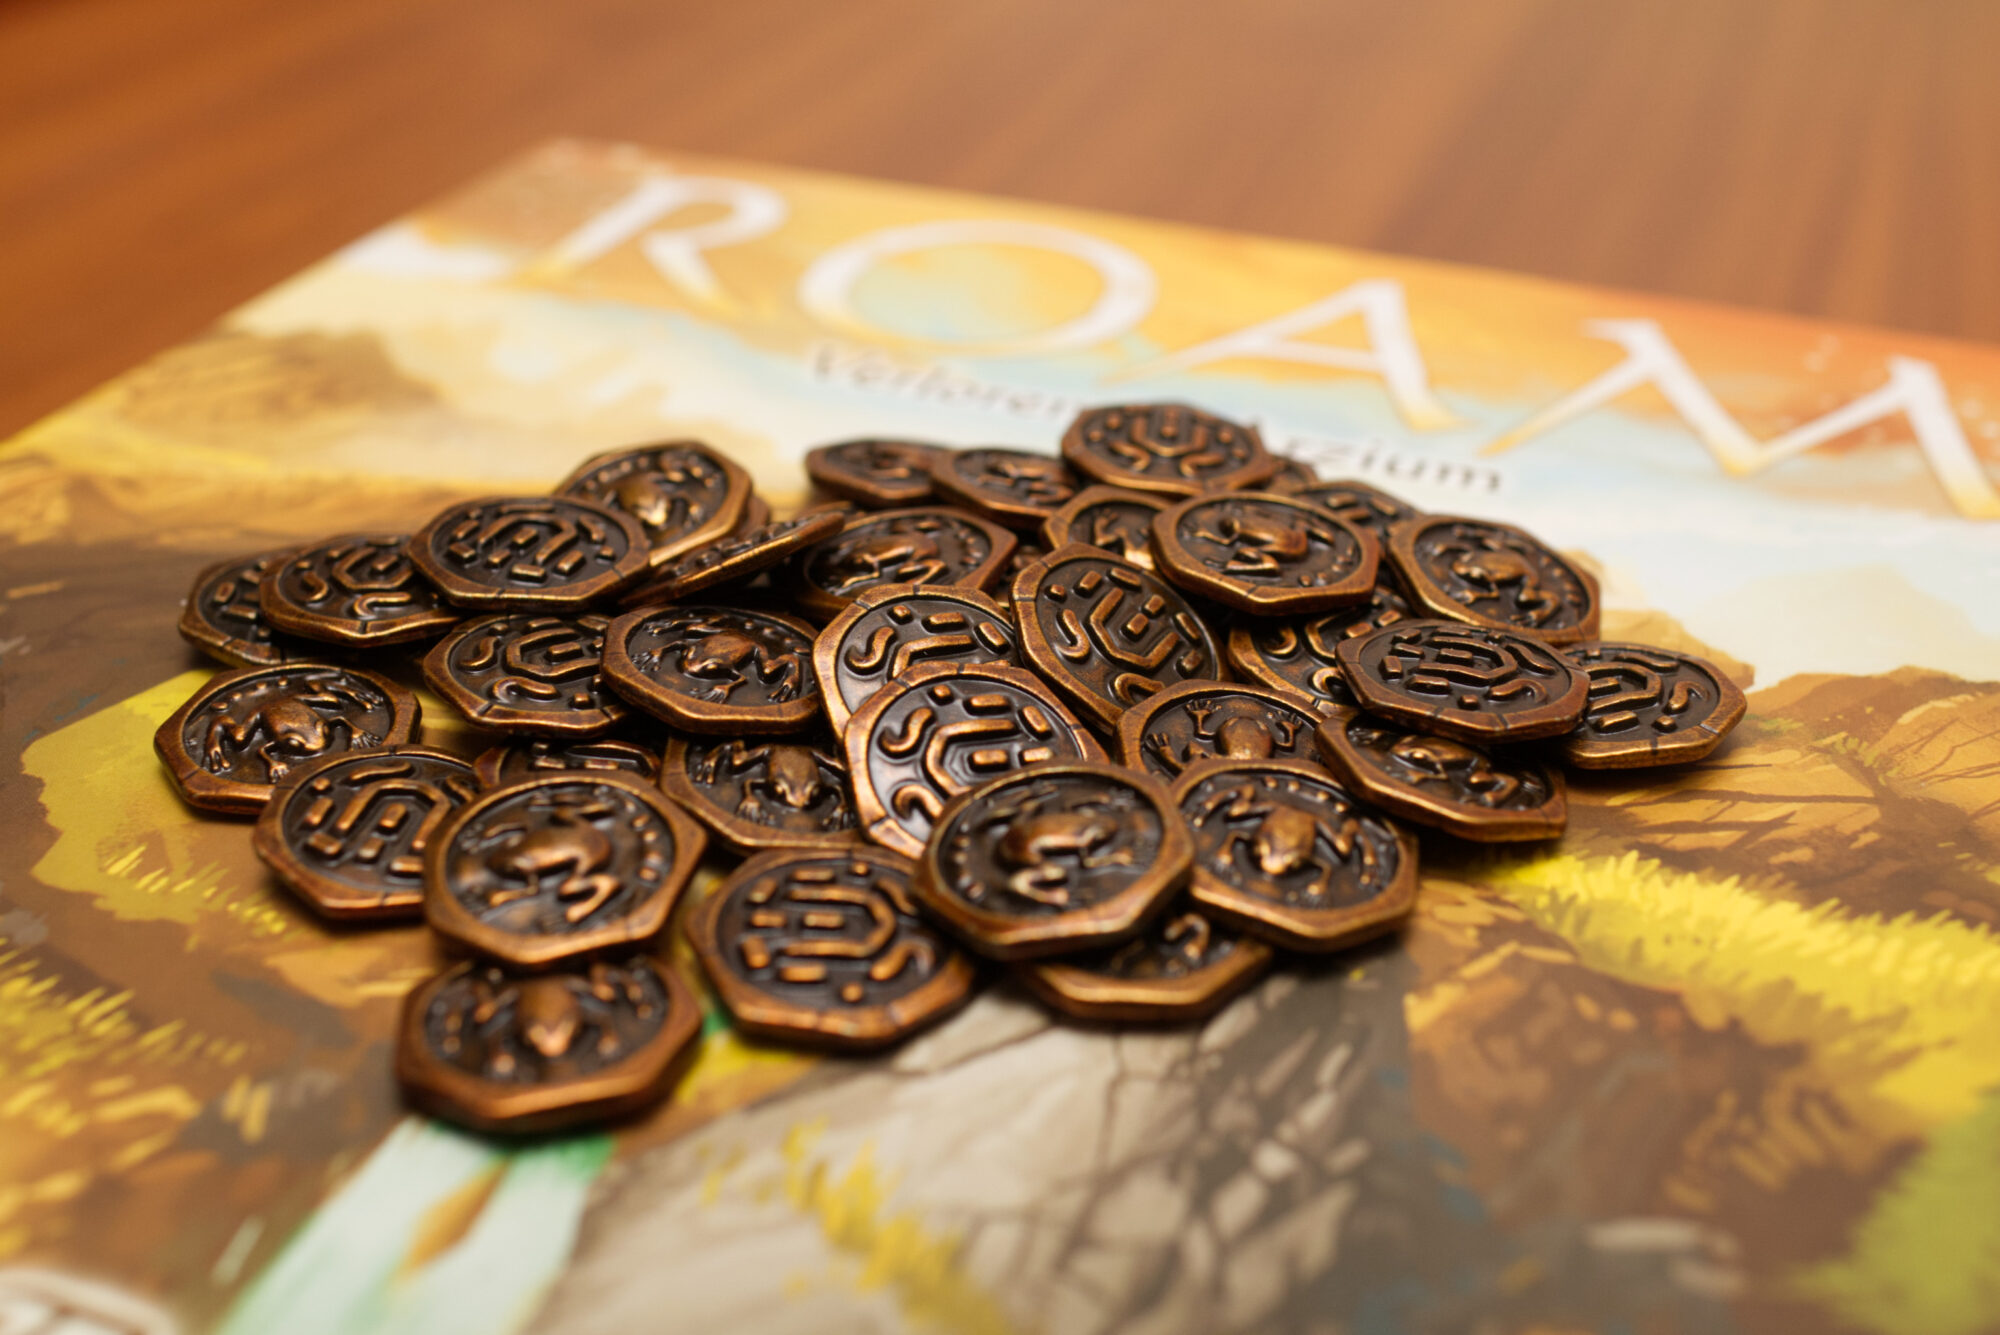 Roam metal coins